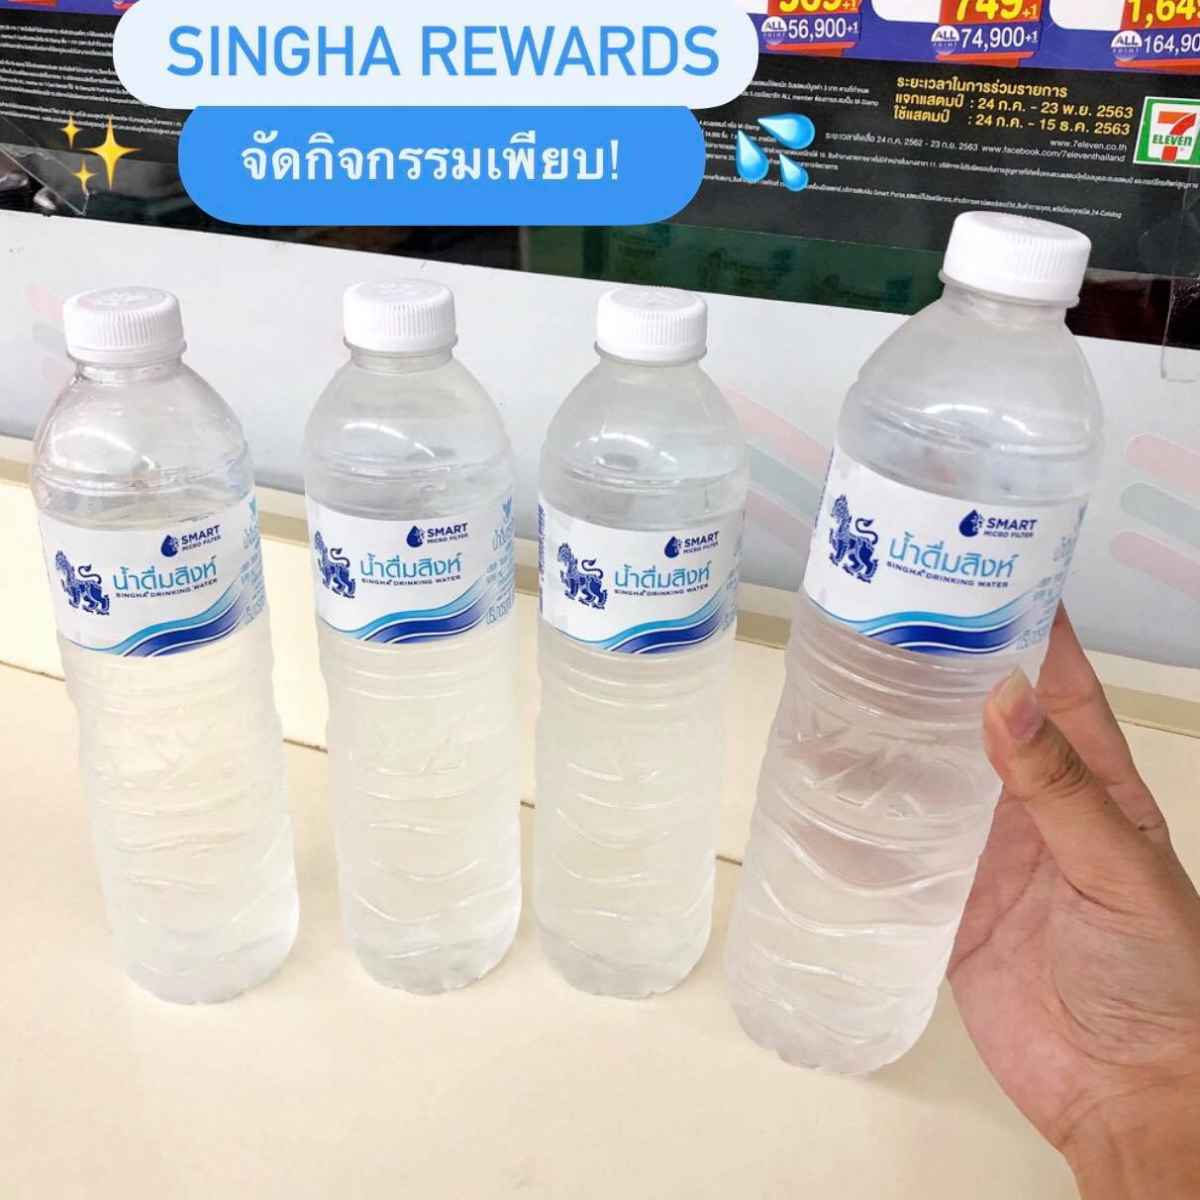 Singha Rewards